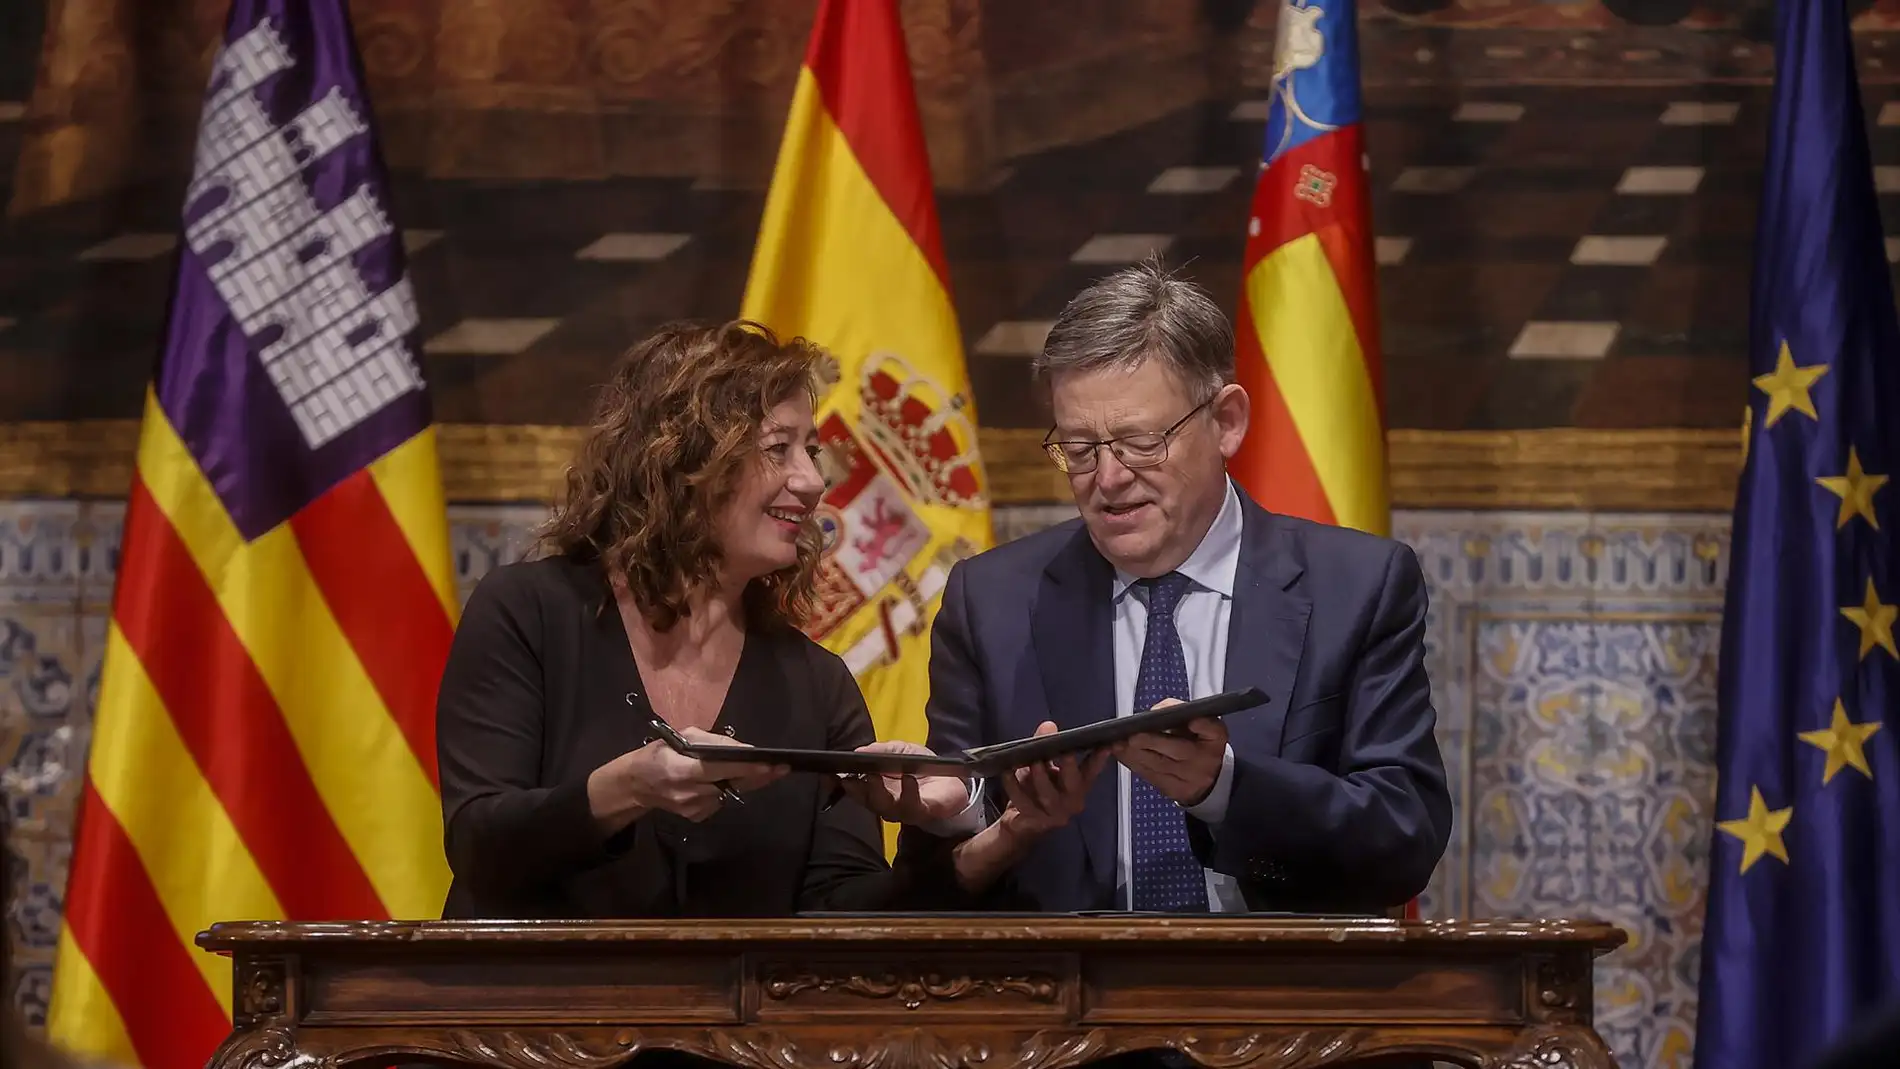  La presidenta del Govern de Illes Balears, Francina Armengol, y el presidente de la Generalitat Valenciana, Ximo Puig, presentan las conclusiones de la última jornada de la II Cumbre Illes Balears-Comunitat Valenciana